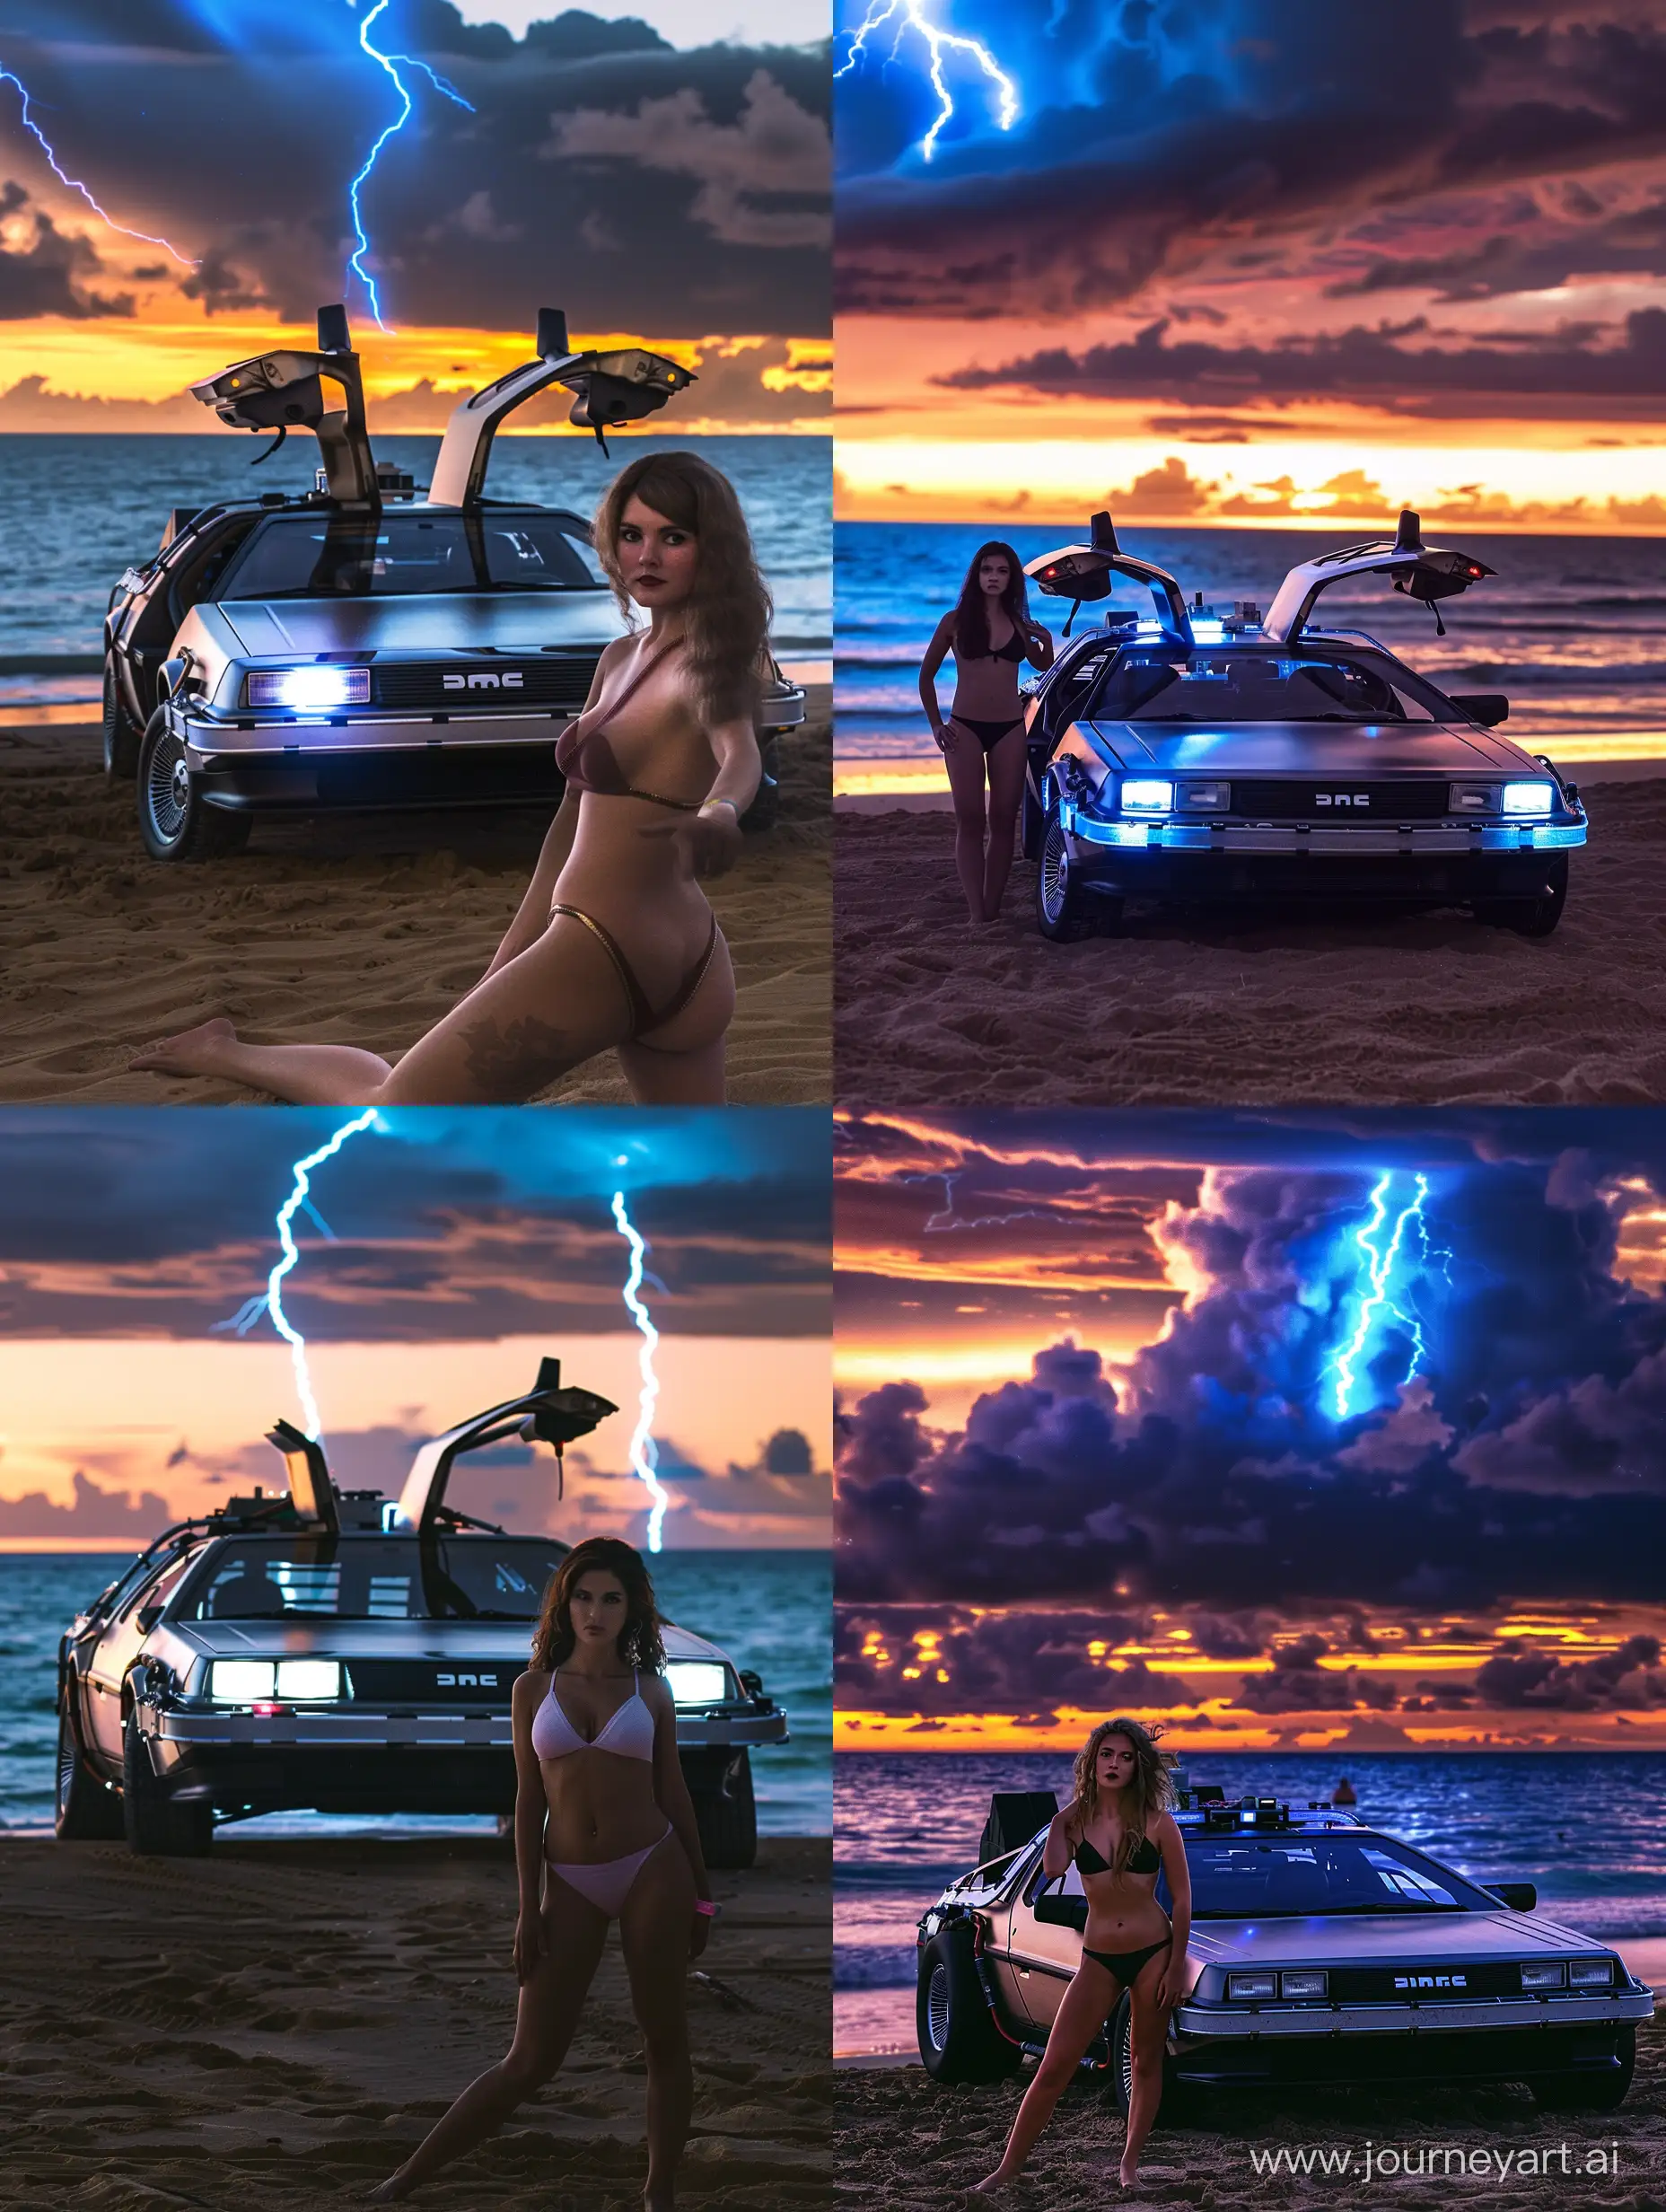 Dramatic-Sunset-Beach-Scene-with-Back-to-the-Future-Delorean-and-Bikini-Model